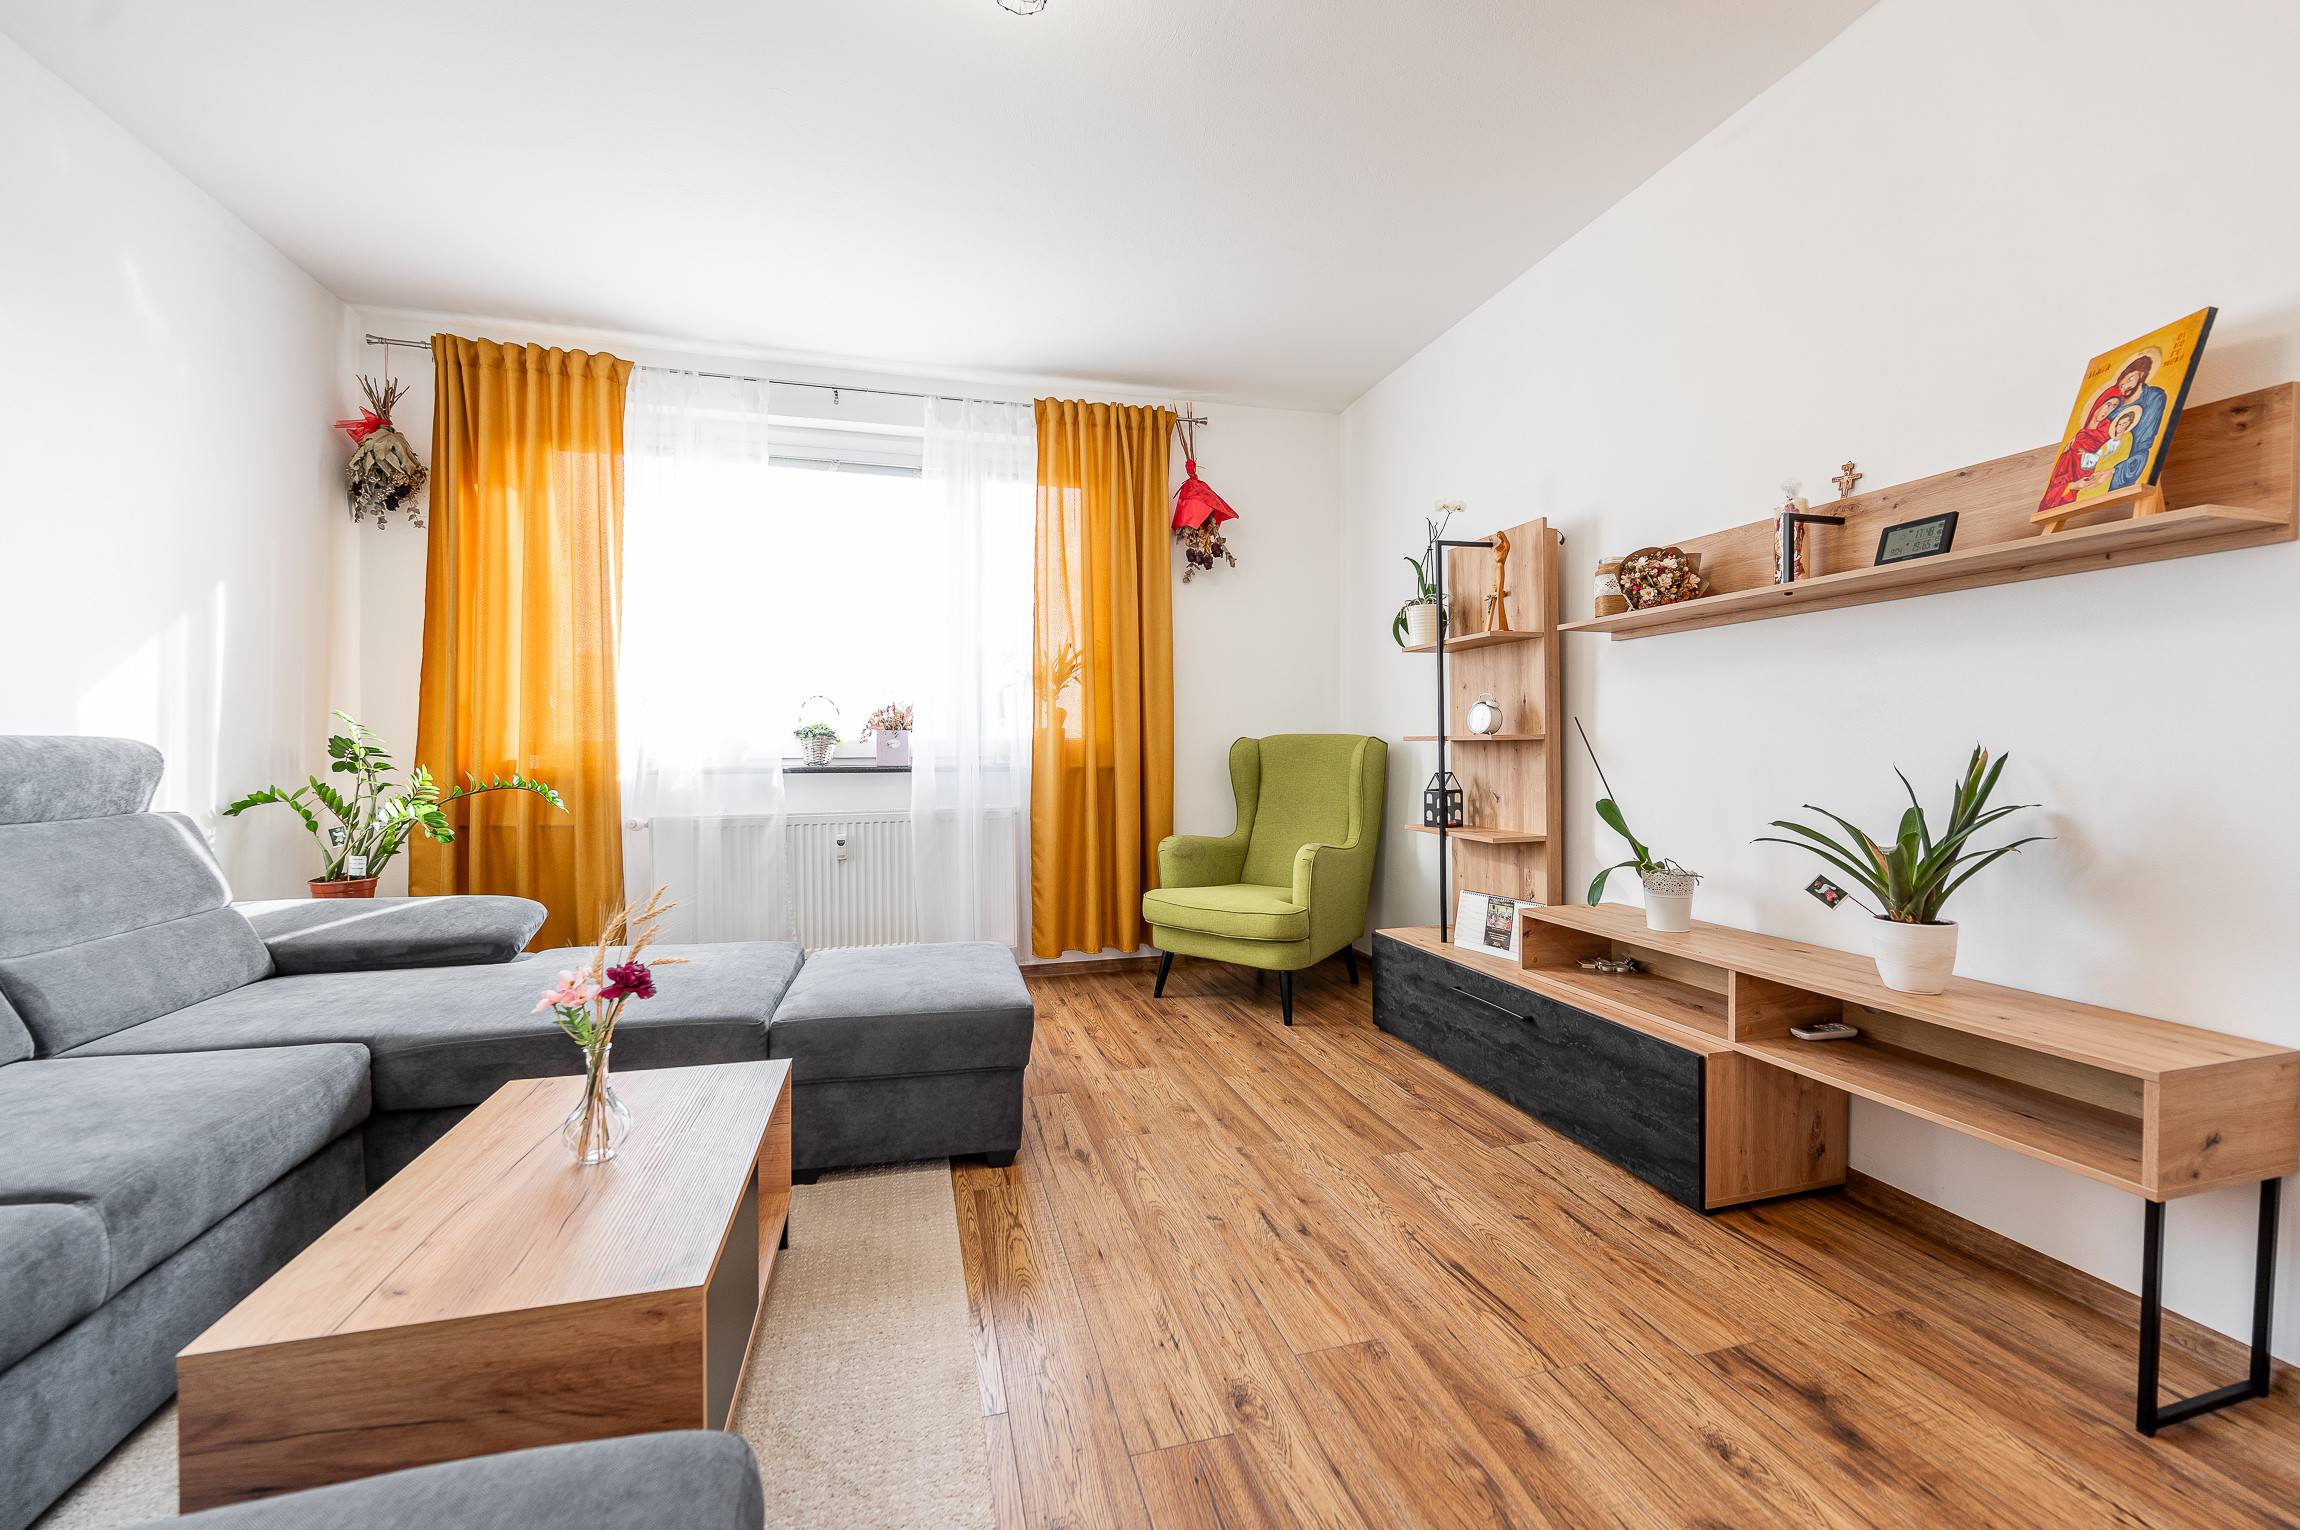 4 izbový byt s loggiou, Košice - KVP